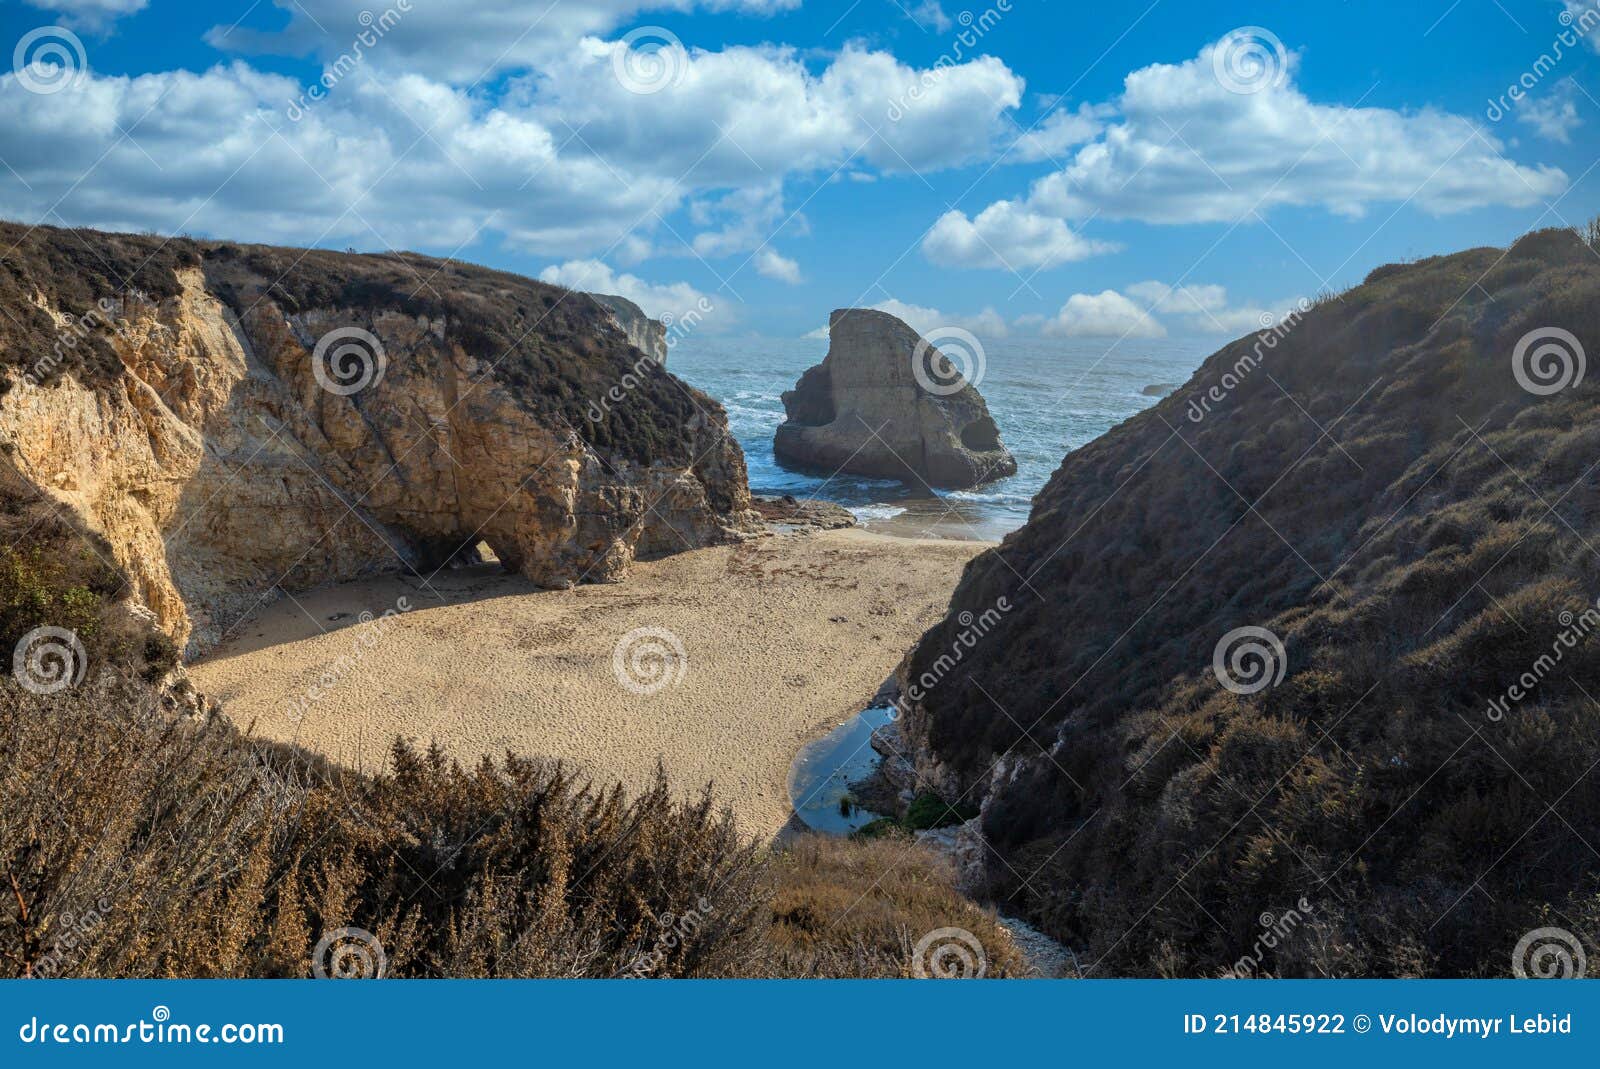 shark fin cove, beautiful beach landscape on the coast of the california highway, ocean, rocks, great sky, clear sunny weather